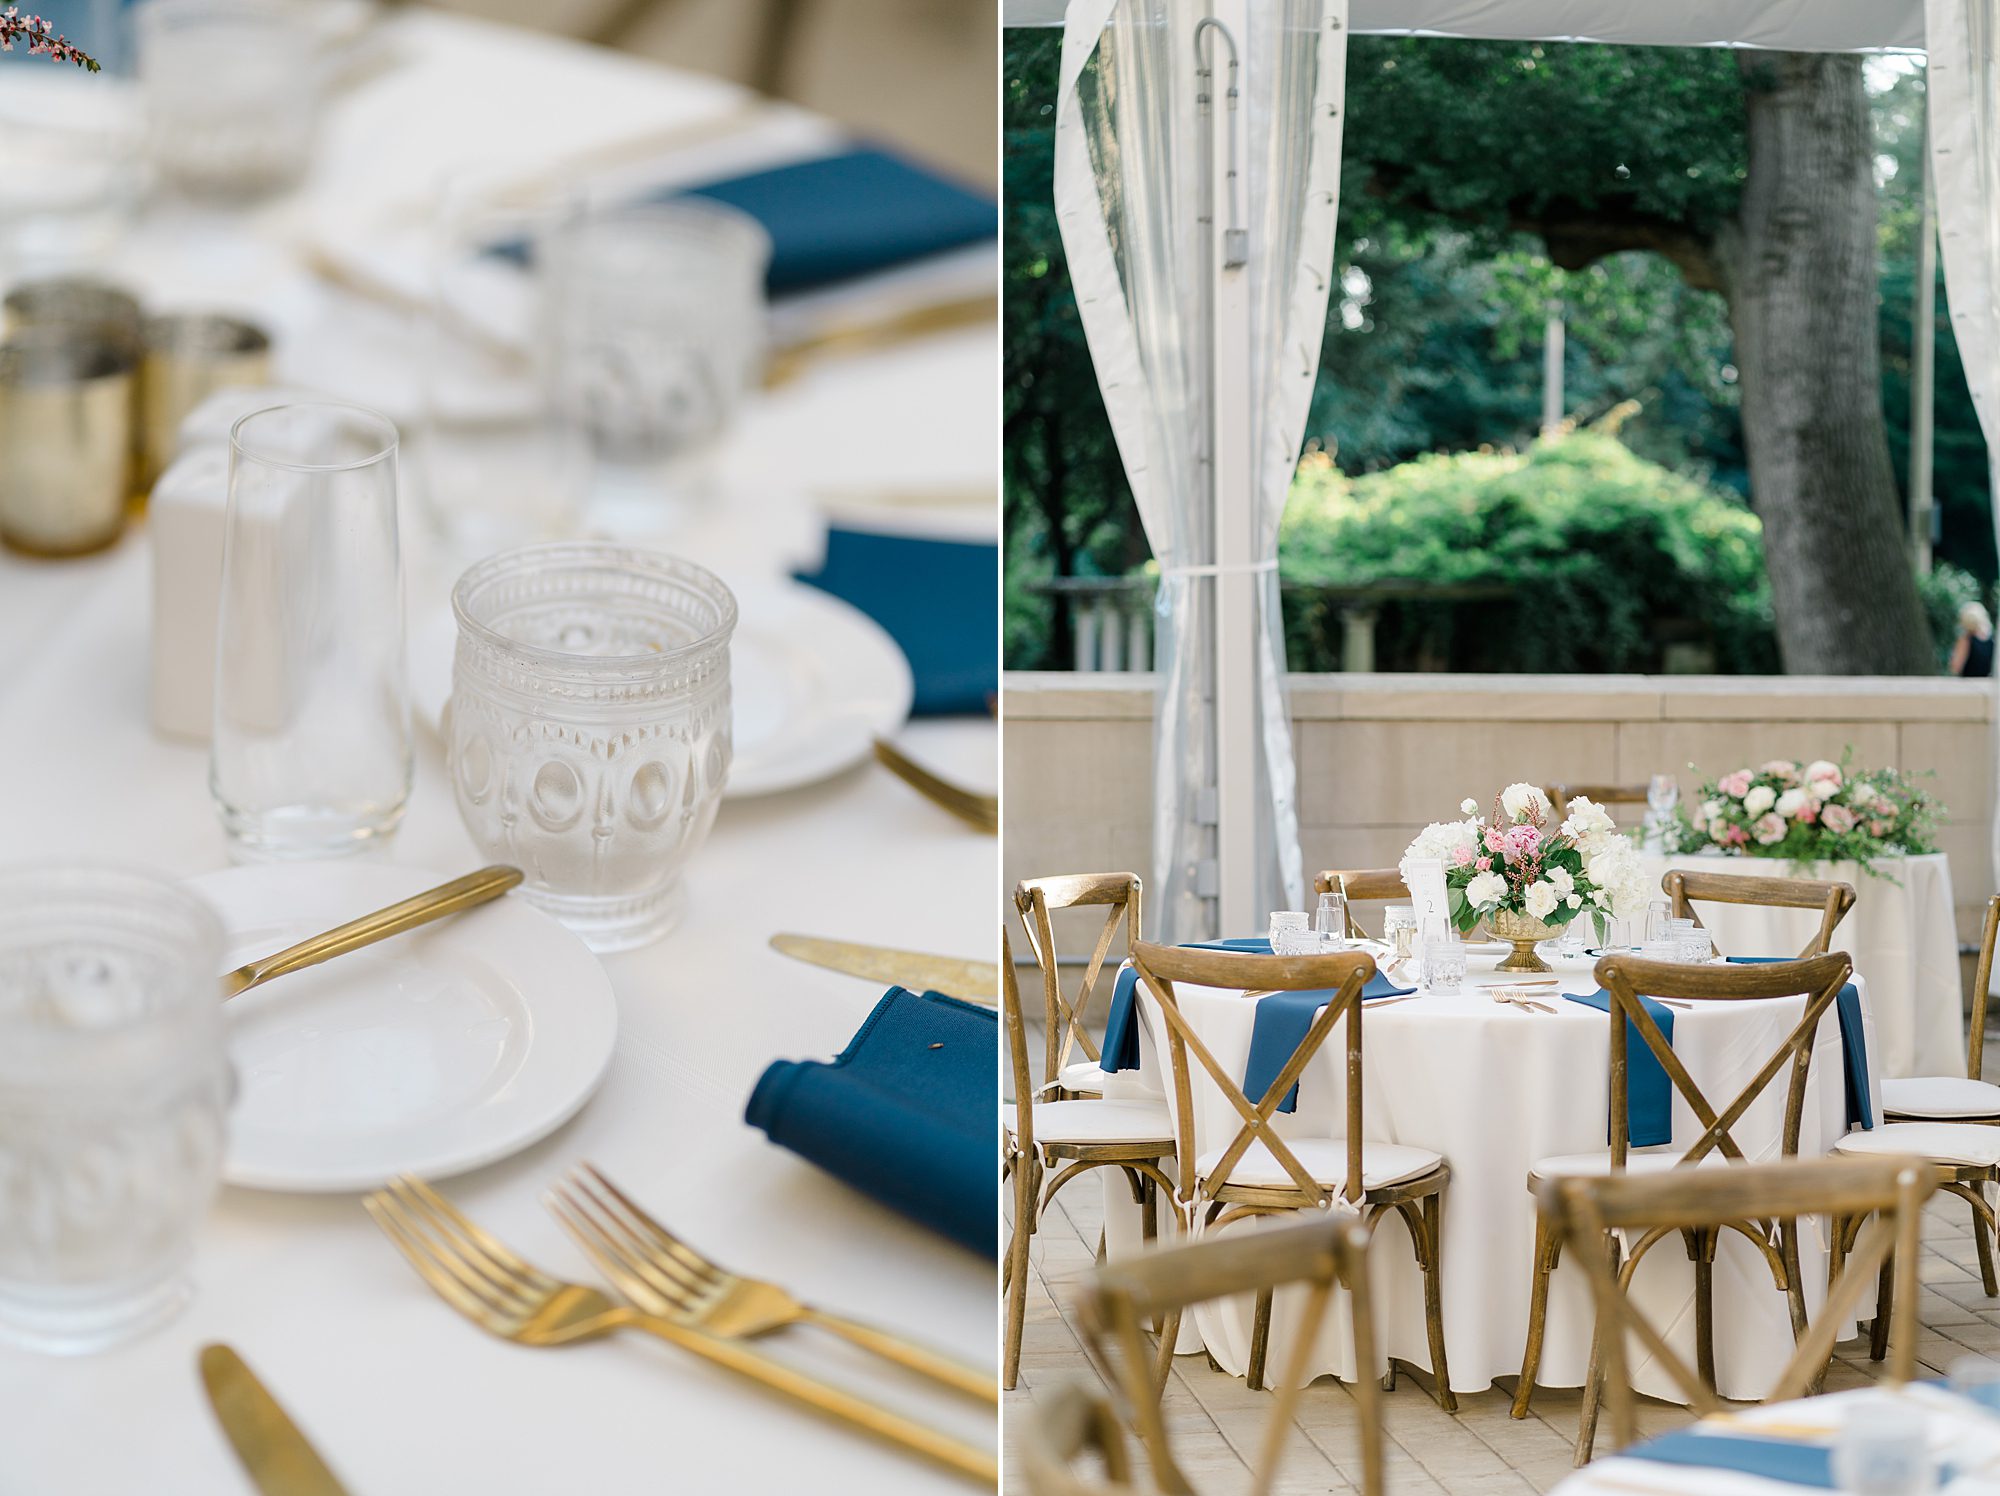 table setting at Curtis Arboretum wedding reception